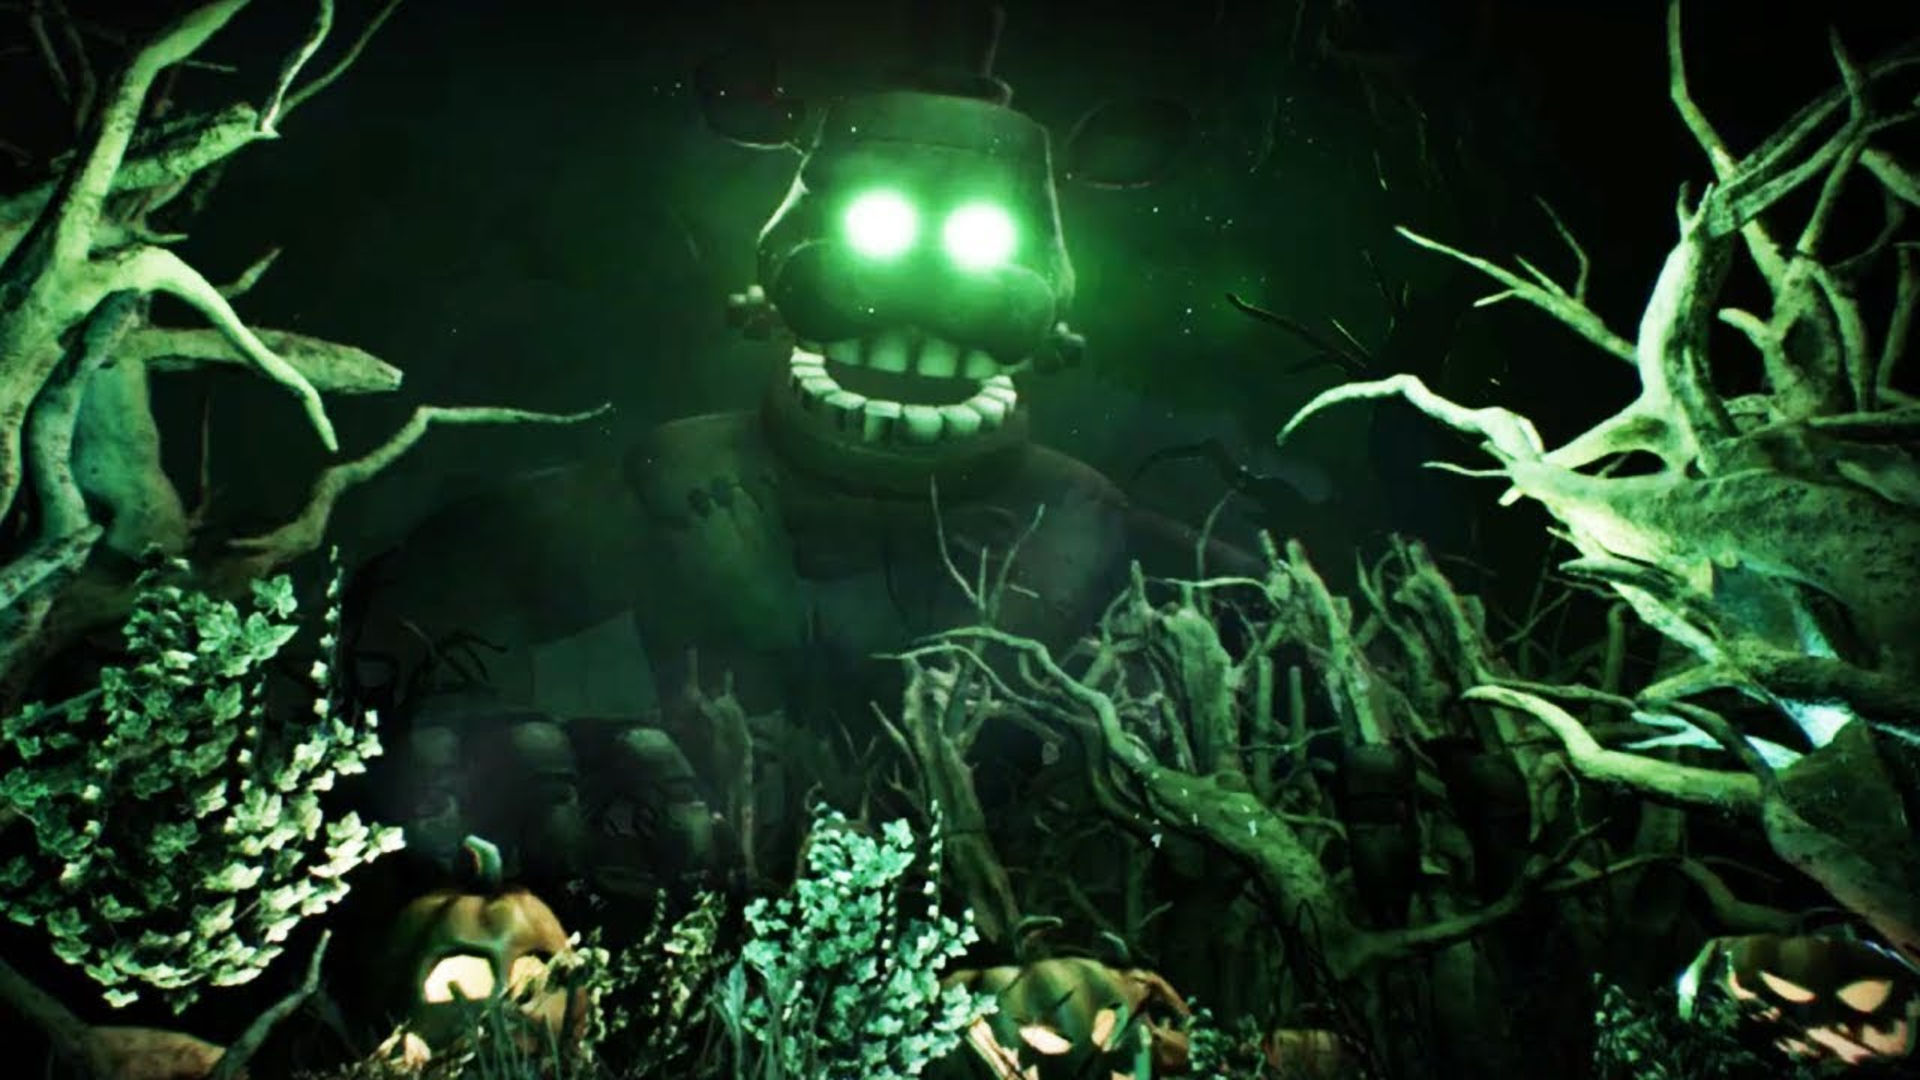 2021 Funko - Five Nights At Freddy's: VR: Curse of Dreadbear